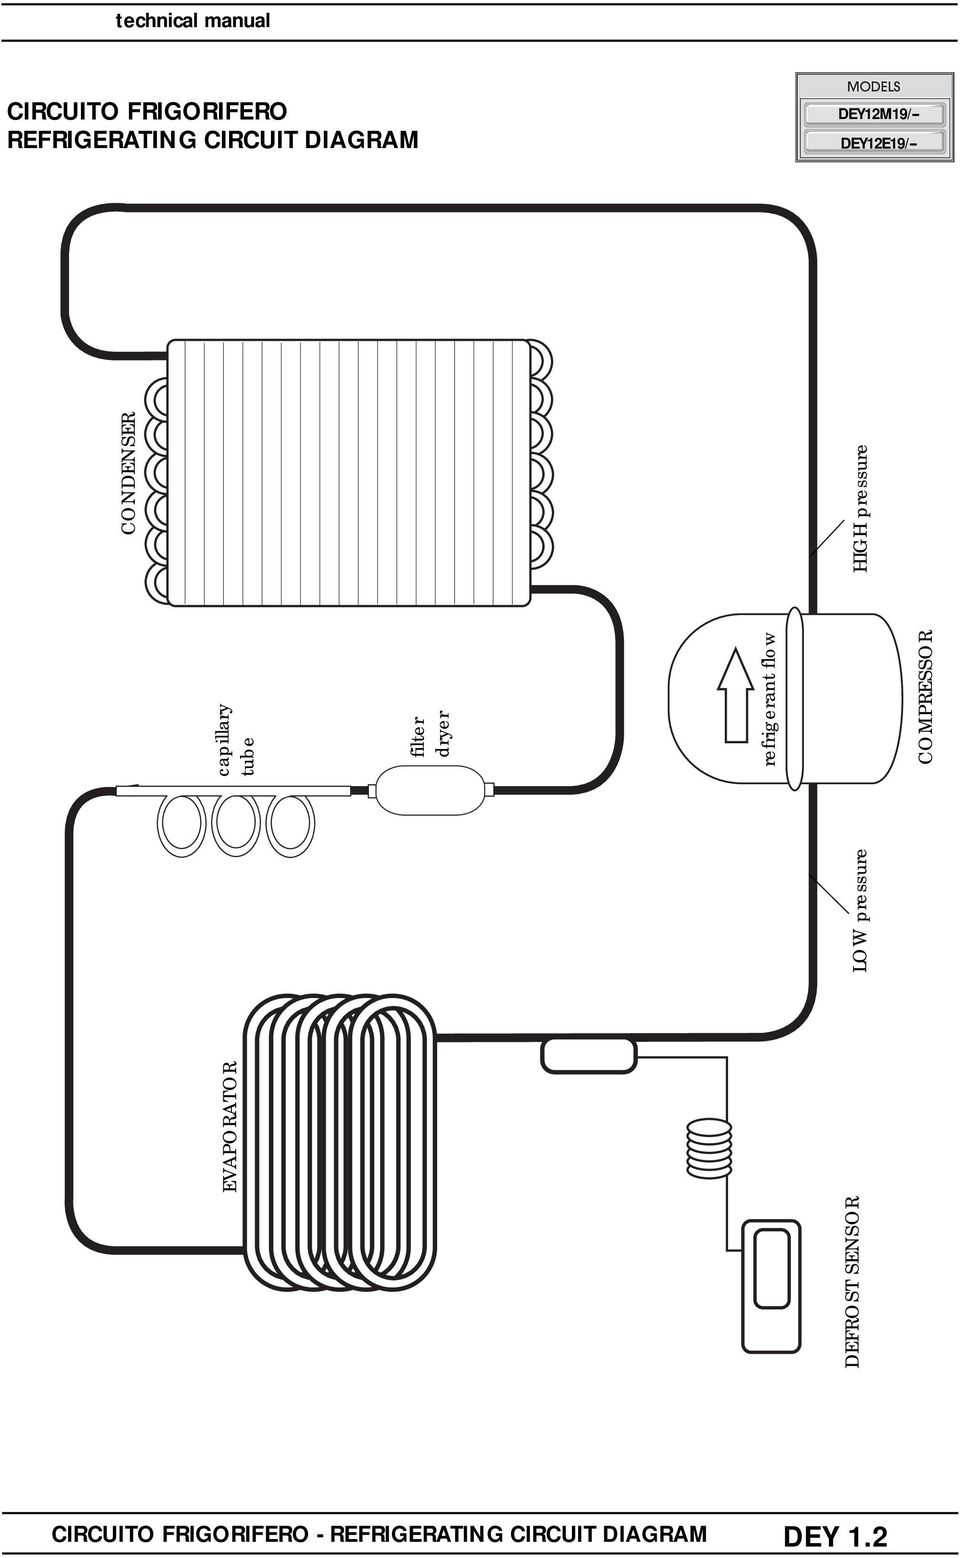 capillary tube filter dryer refrigerant flow COMPRESSOR CONDENSER